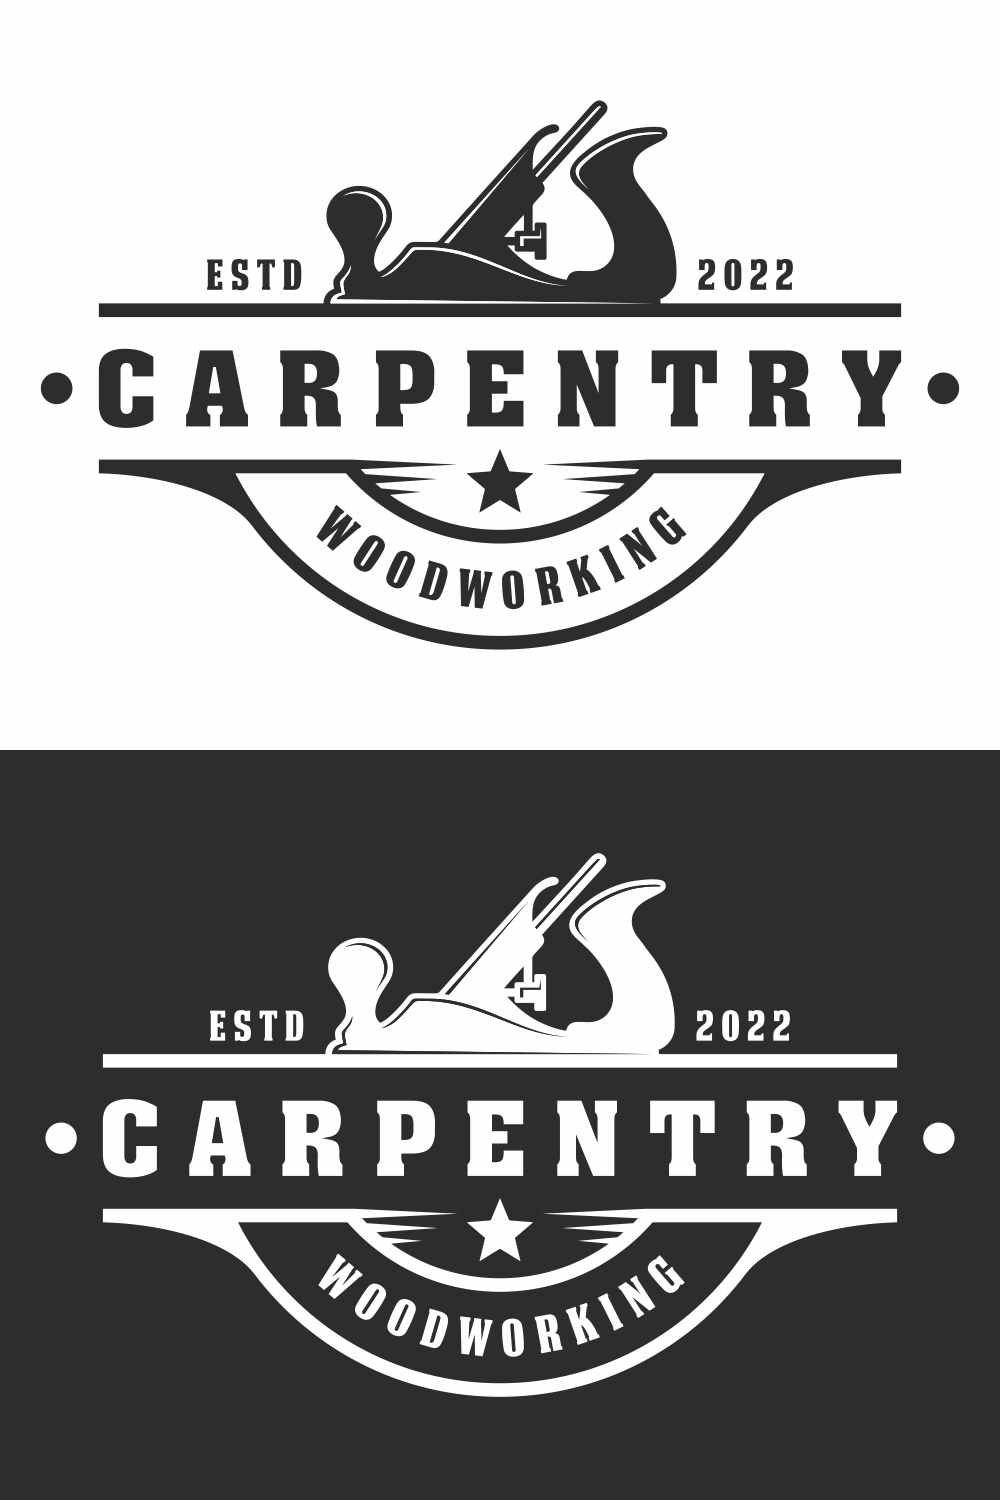 Carpentry vintage logo design template – Only $6 pinterest preview image.